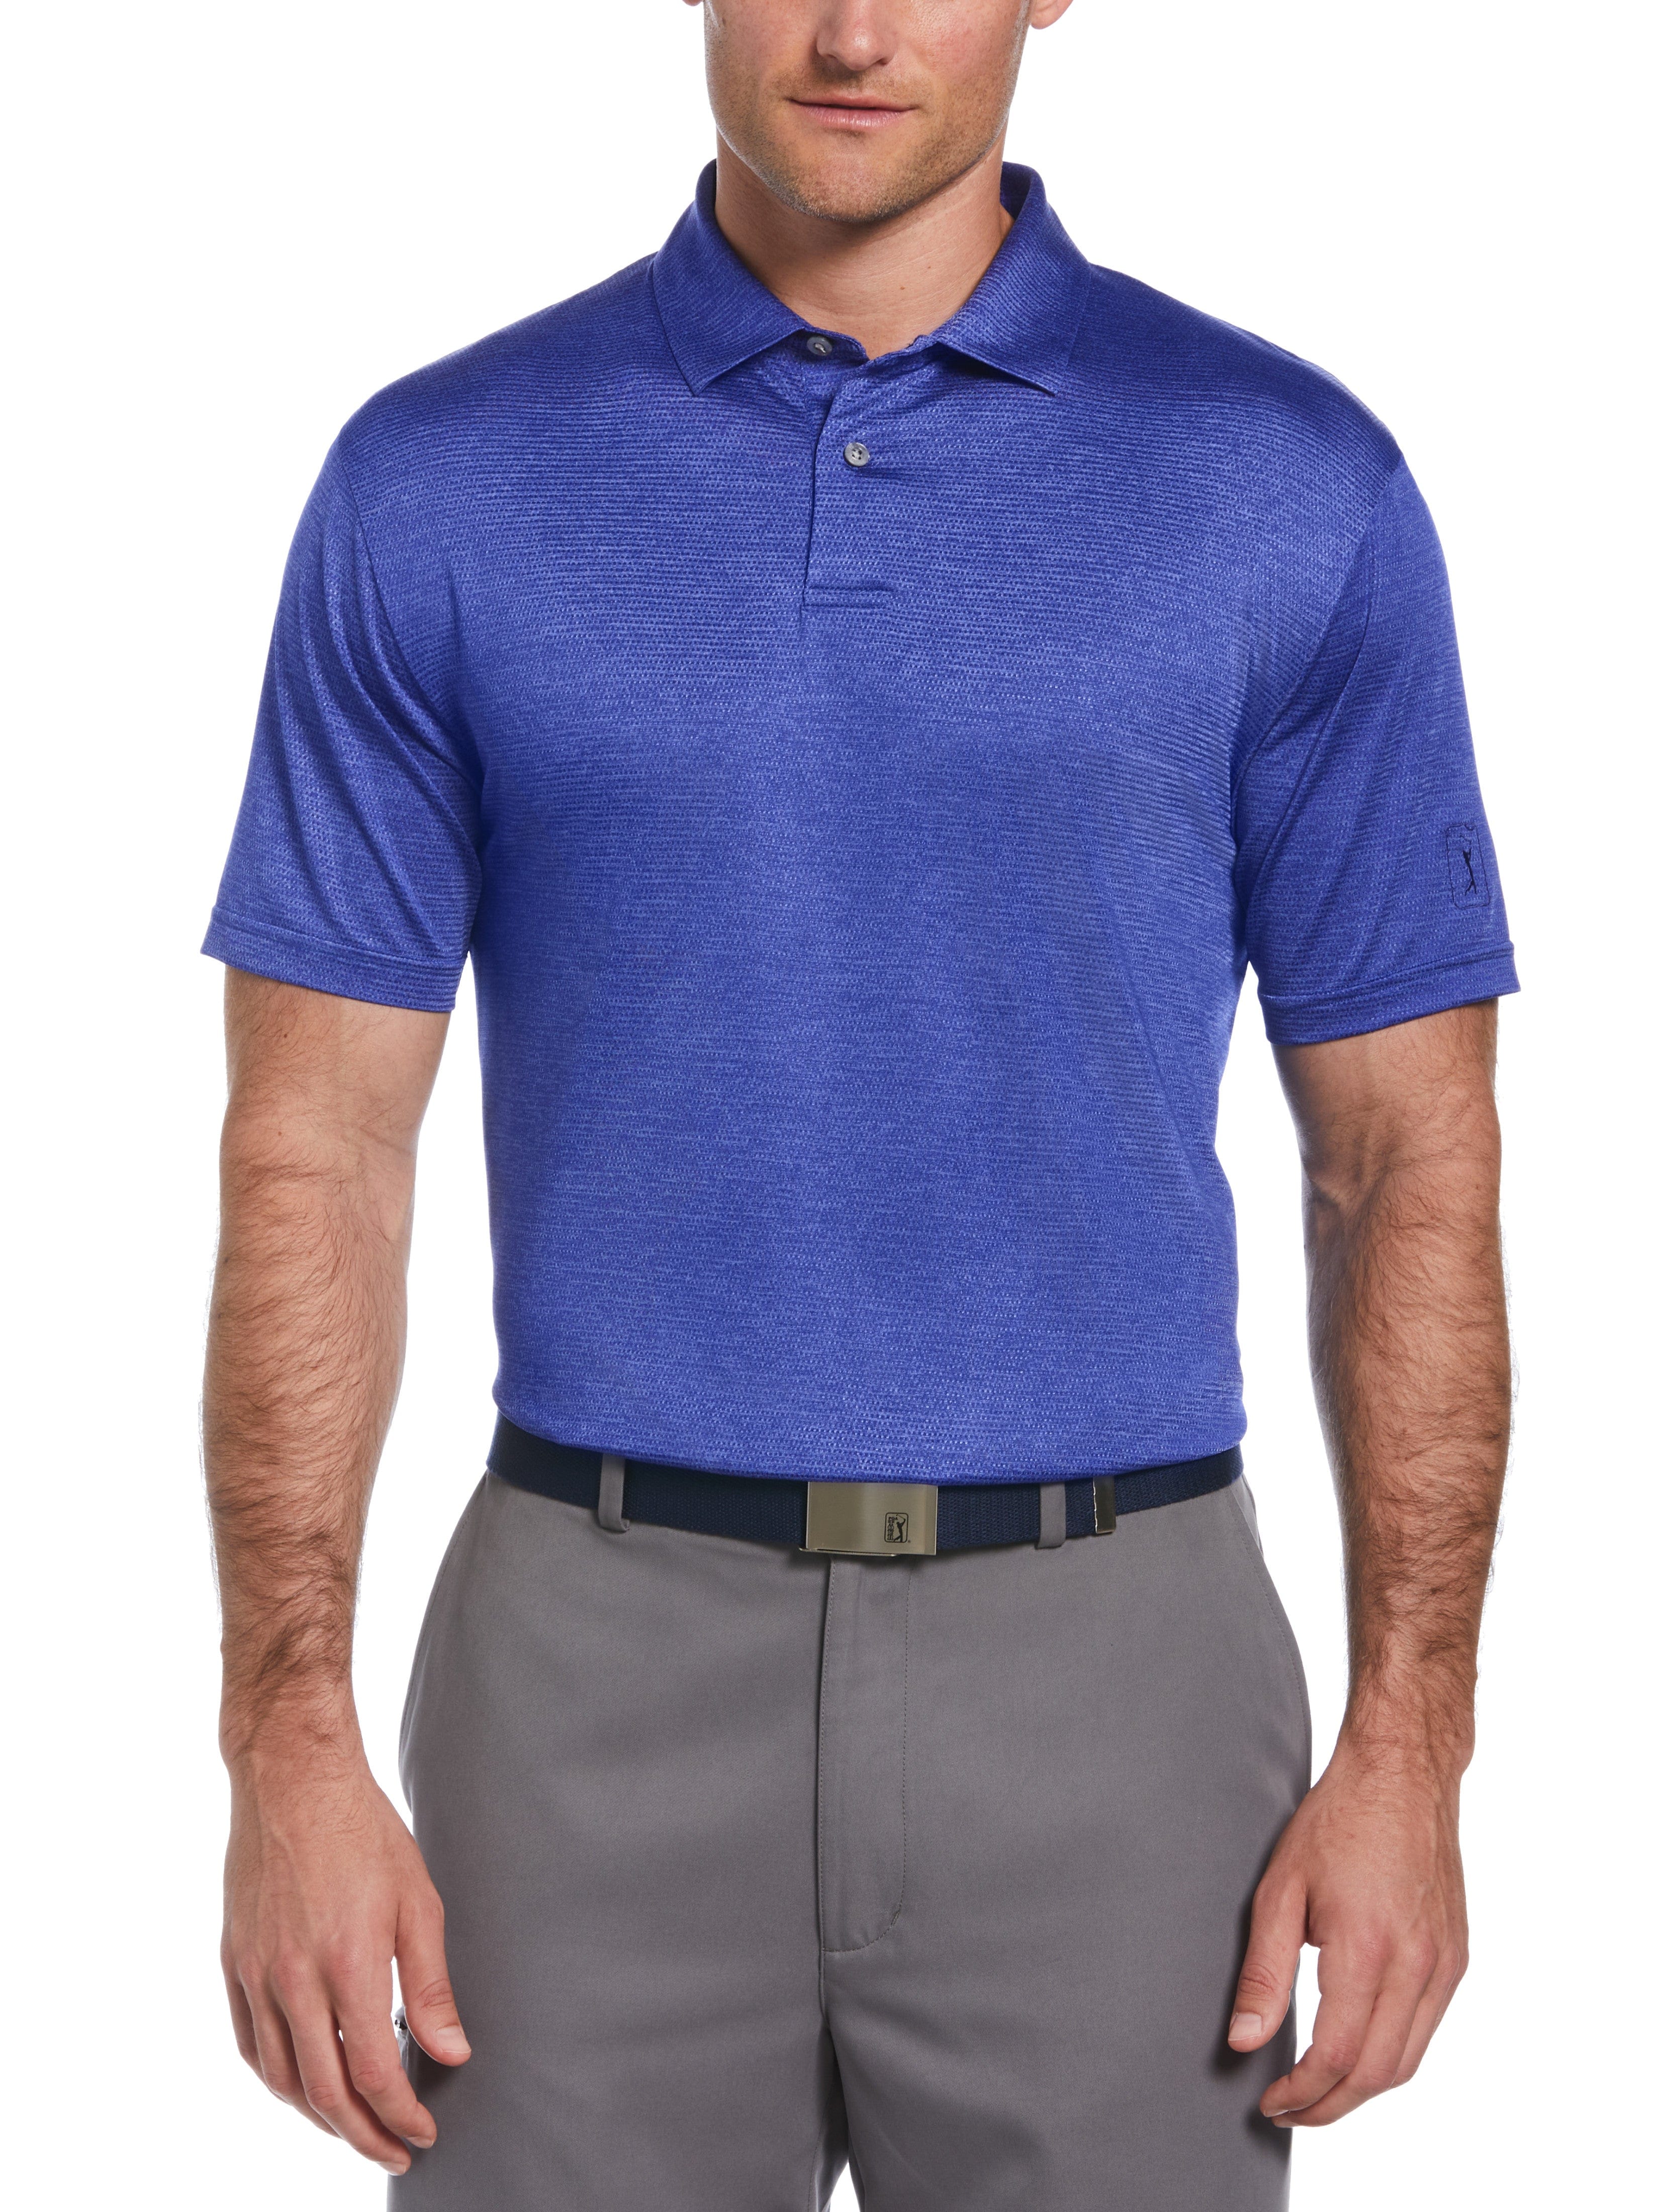 PGA TOUR Apparel Mens Space Dye Texture Golf Polo Shirt, Size Small, Light Dazzling Blue Heather, 100% Polyester | Golf Apparel Shop